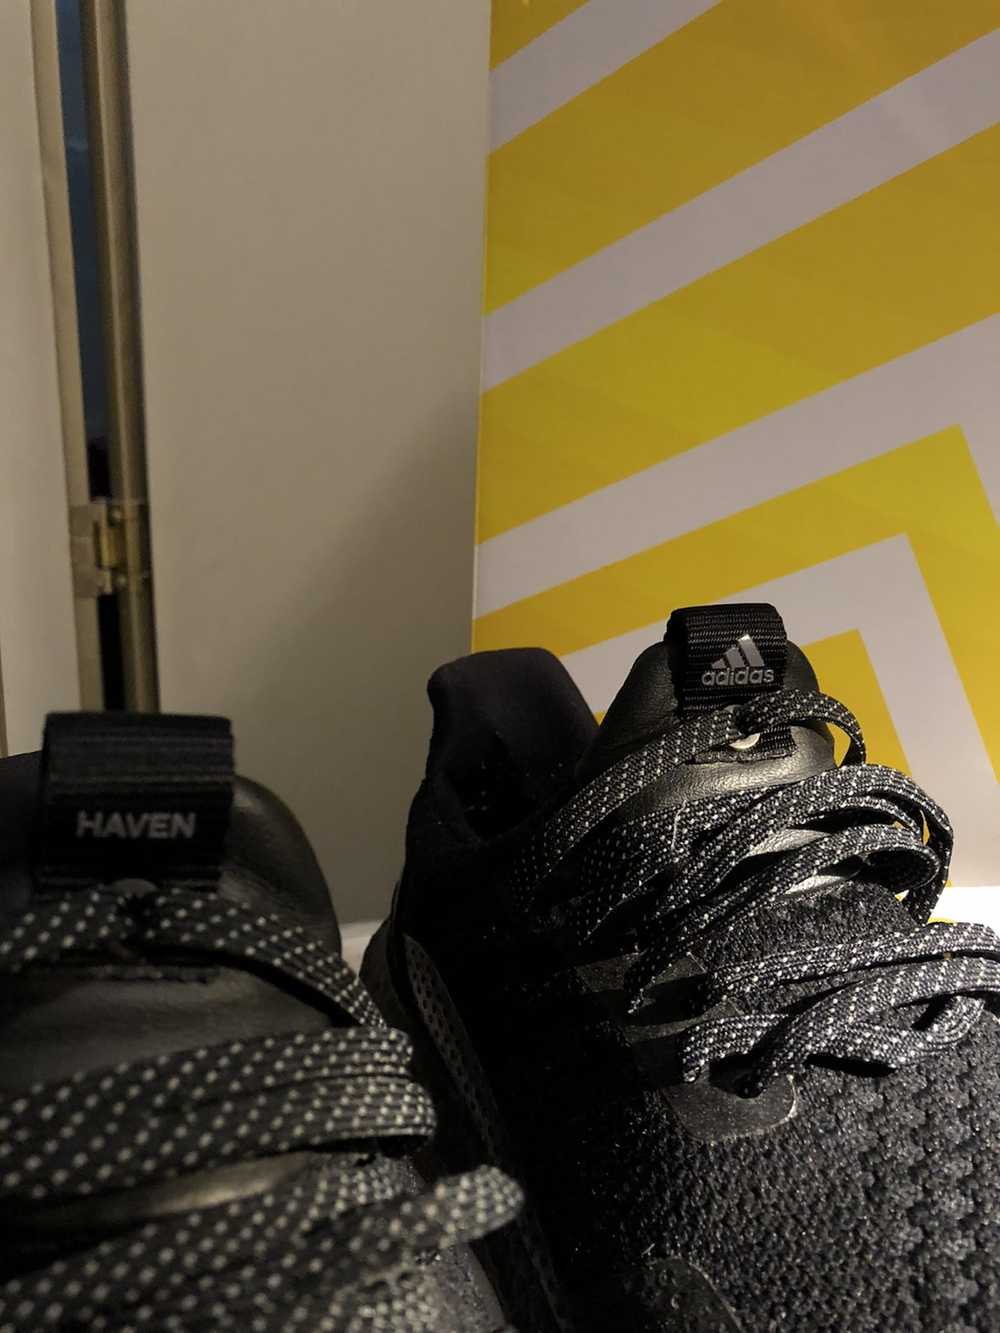 Adidas HAVEN x UltraBoost Uncaged Triple Black - image 5